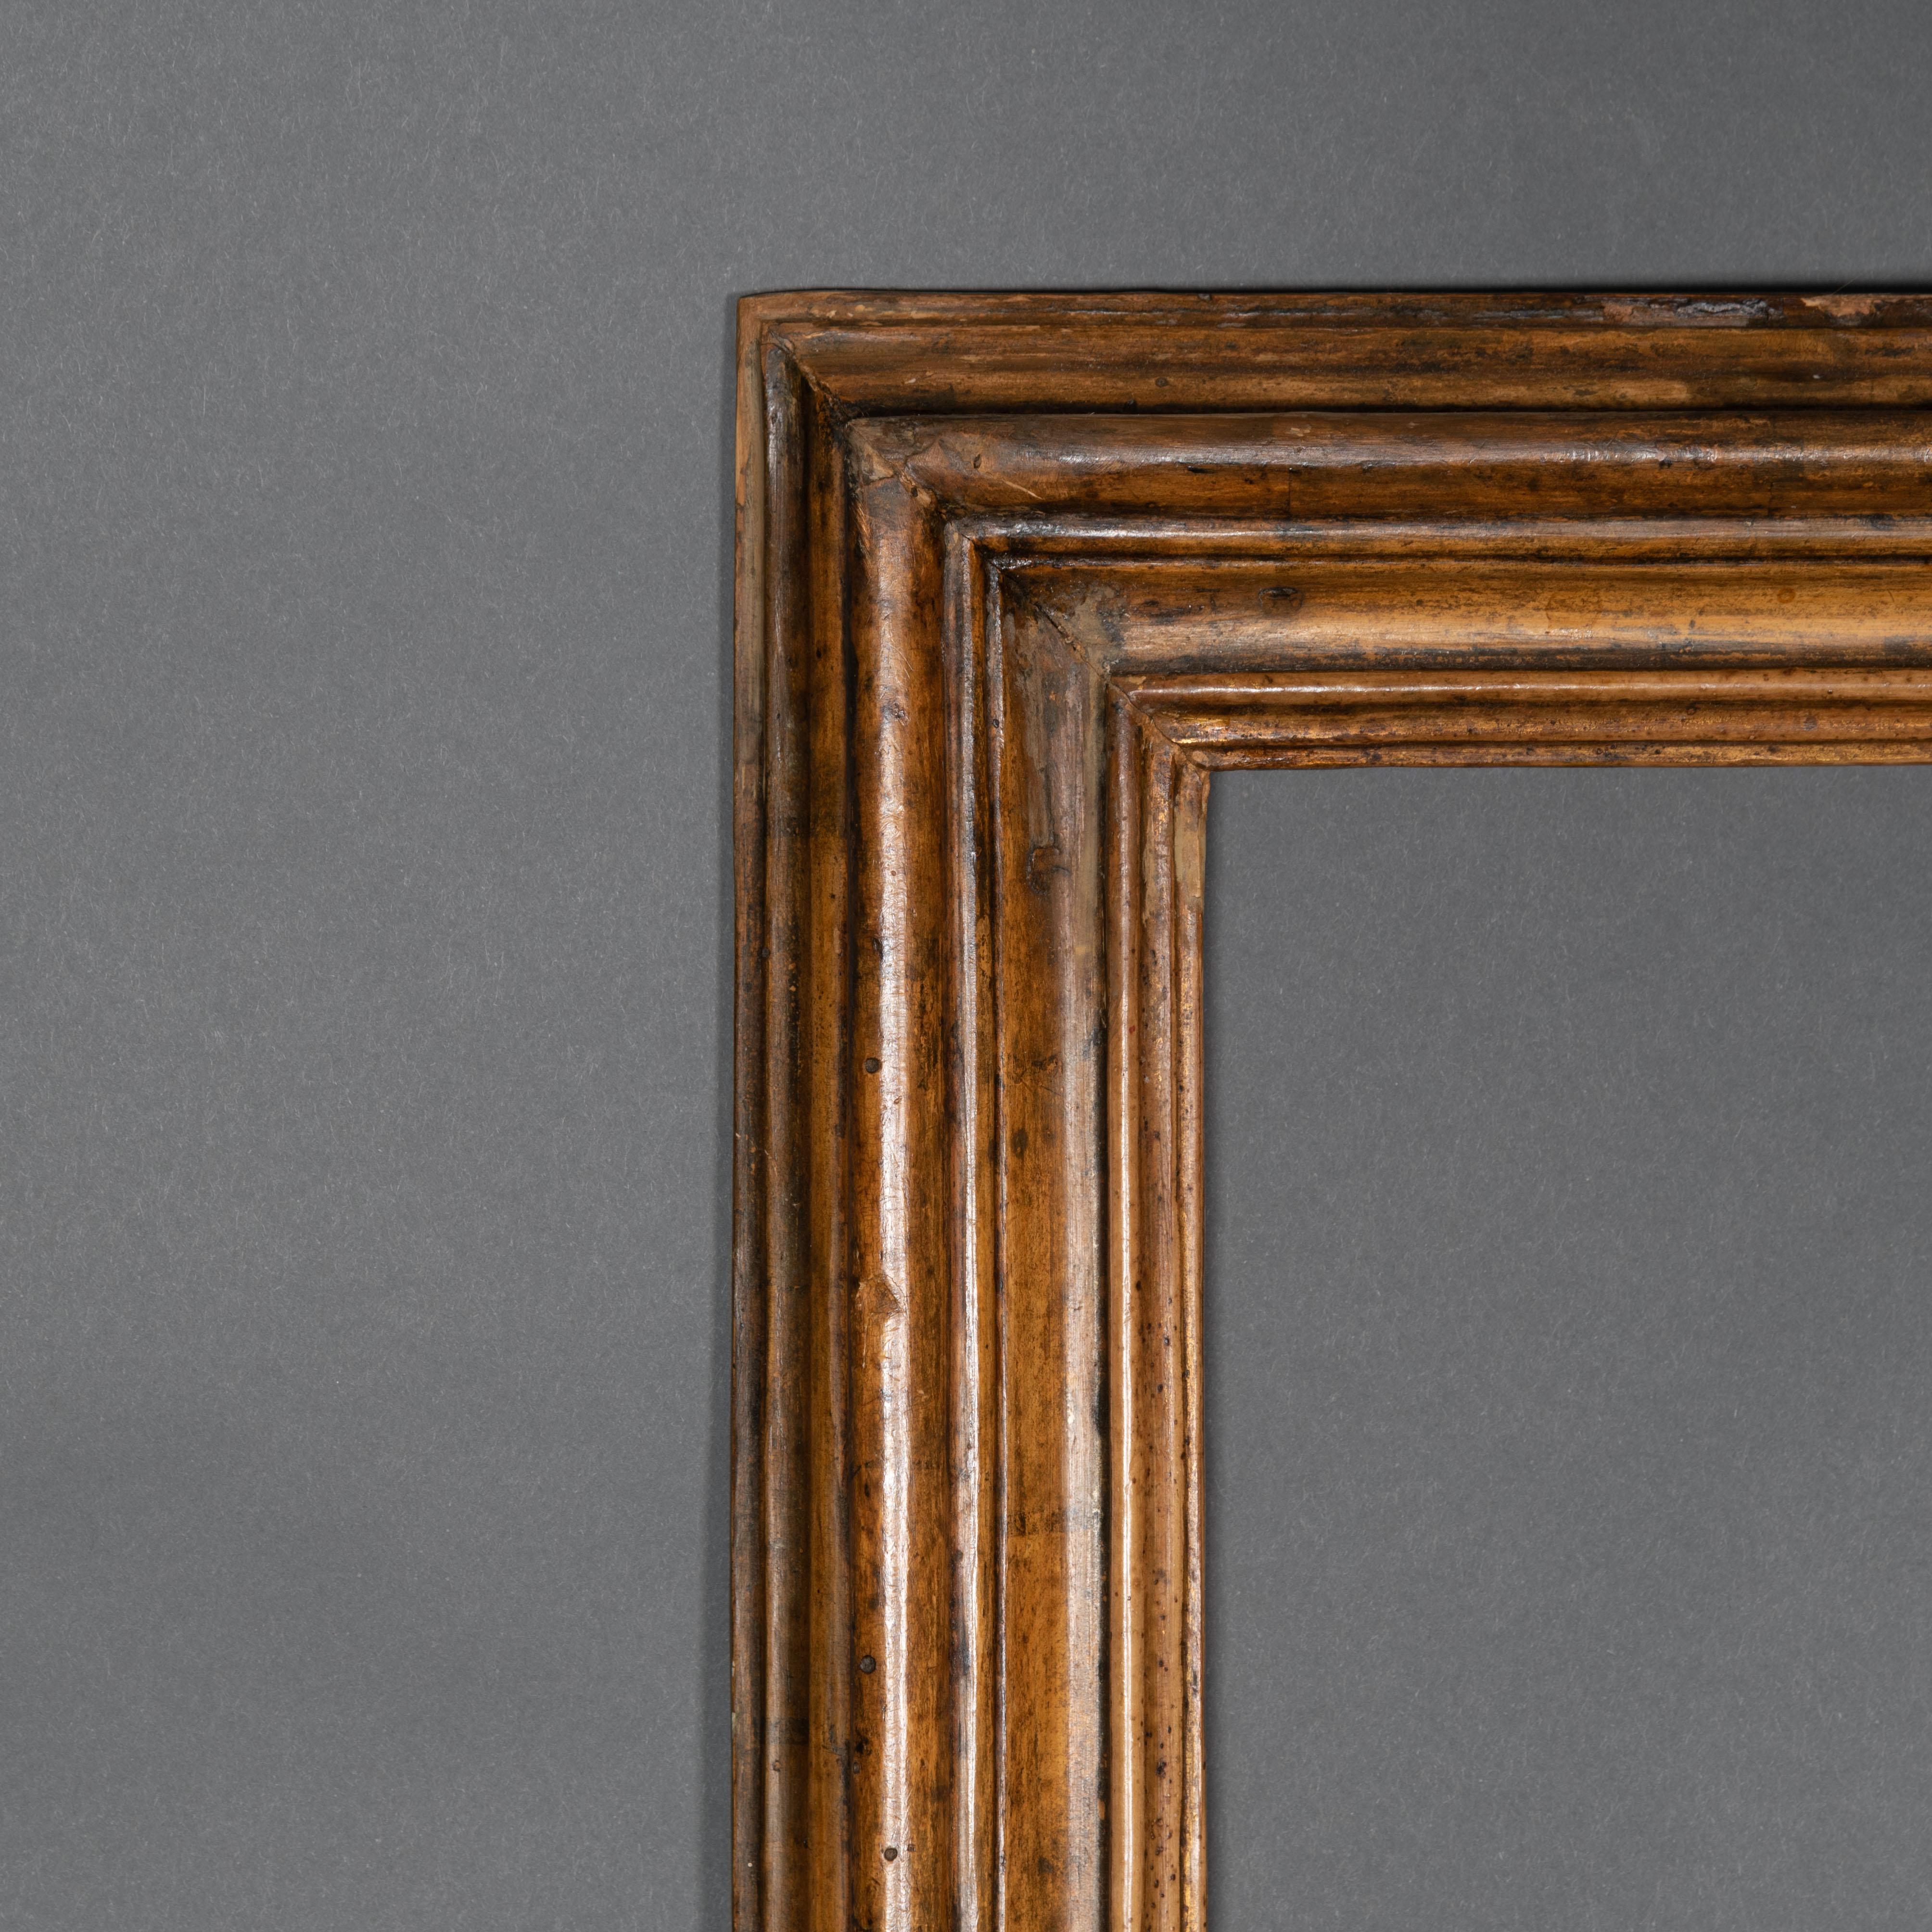 Salvator Rosa last 17th century giltwood frame.
Internal measurements cm 32.x 40.8

Pure example of Italian Salvator Rosa gild wood frame of 17th century.
